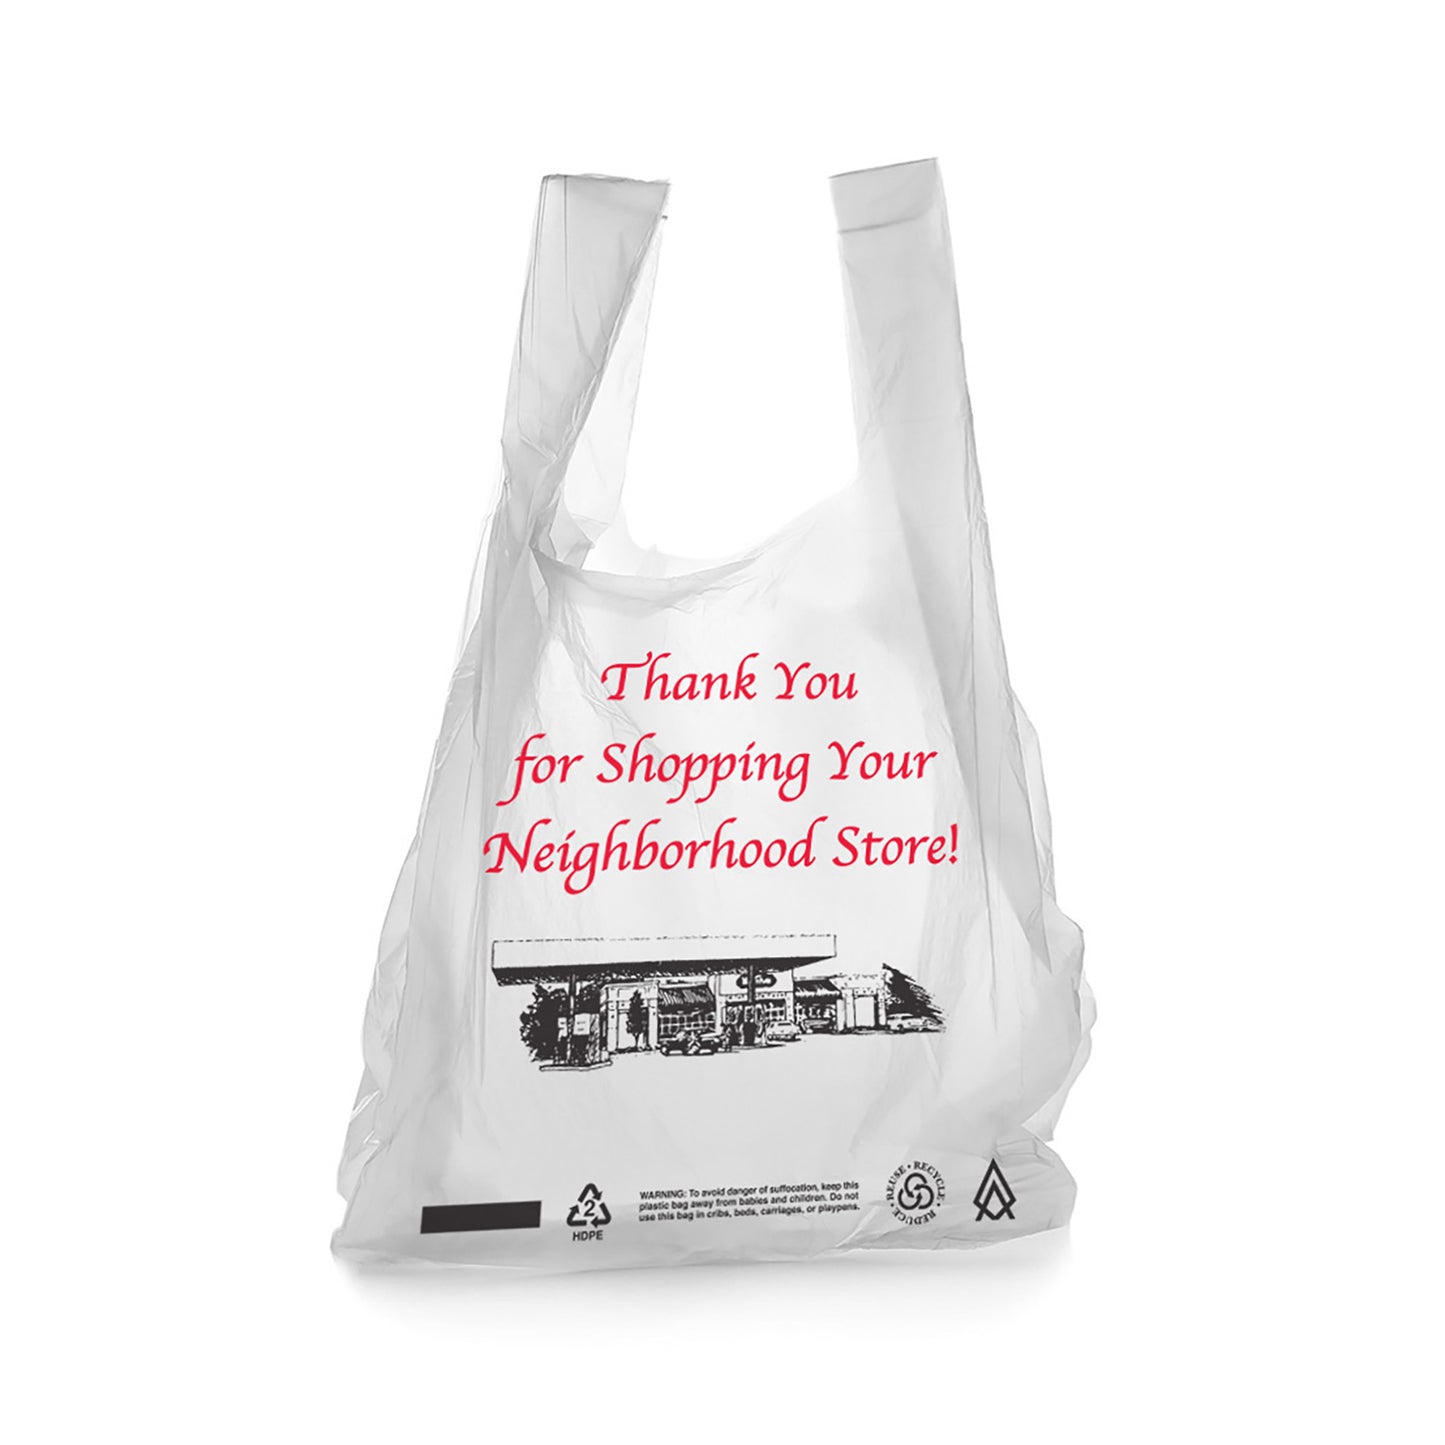 Neighborhood T-Shirt Bag on a Roll - White HDPE Plastic